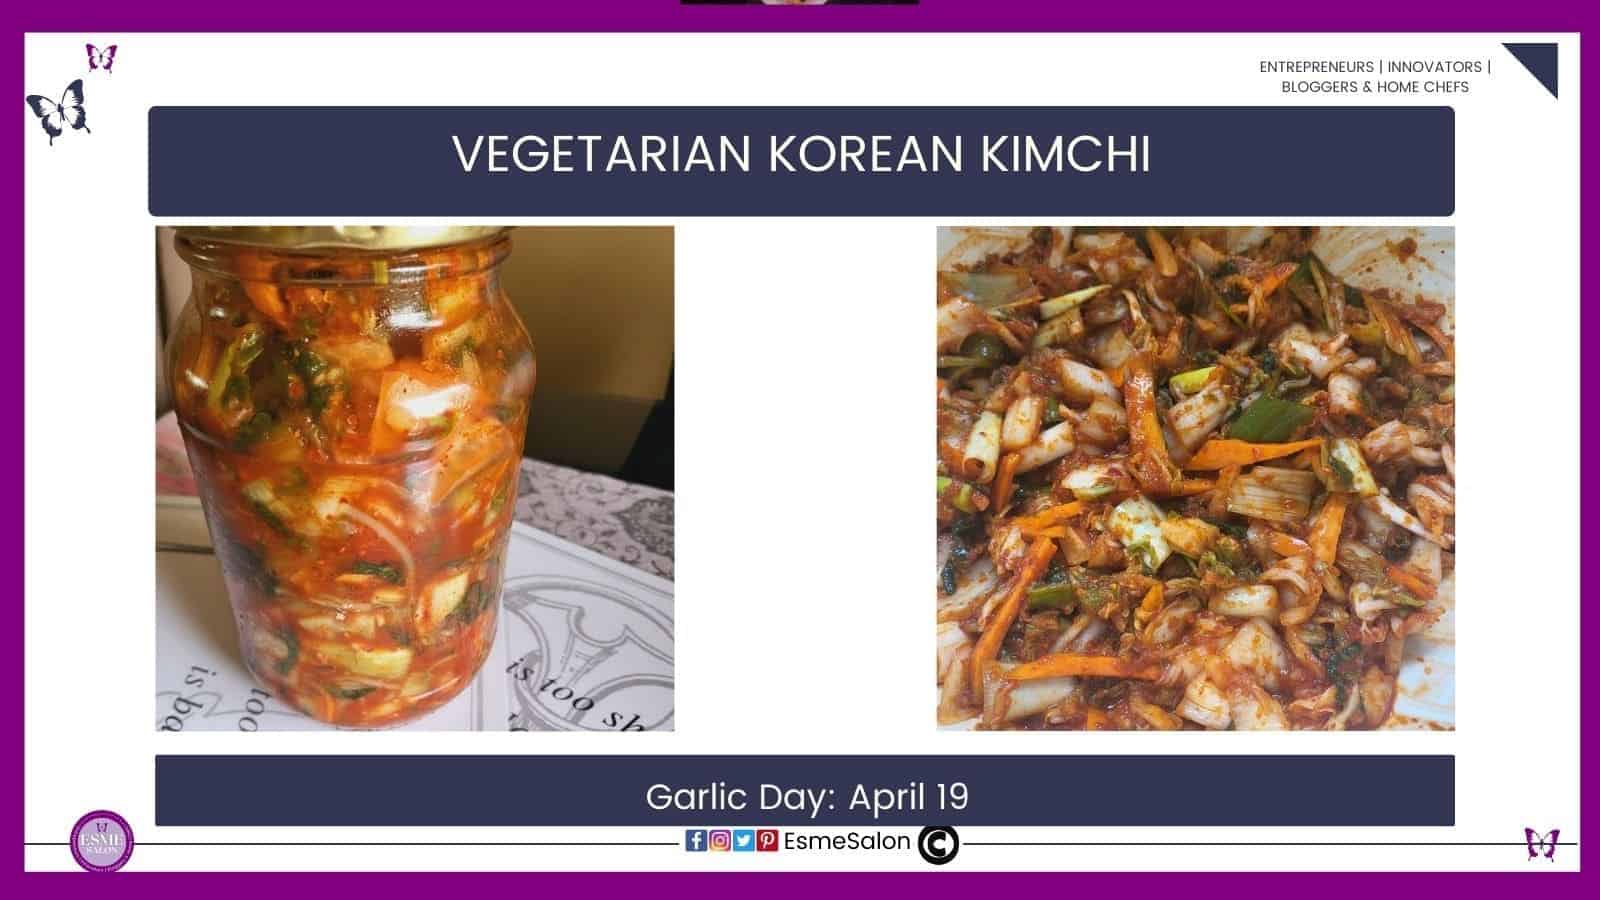 An image of a bottled of homemade Vegetarian Korean Kimchi